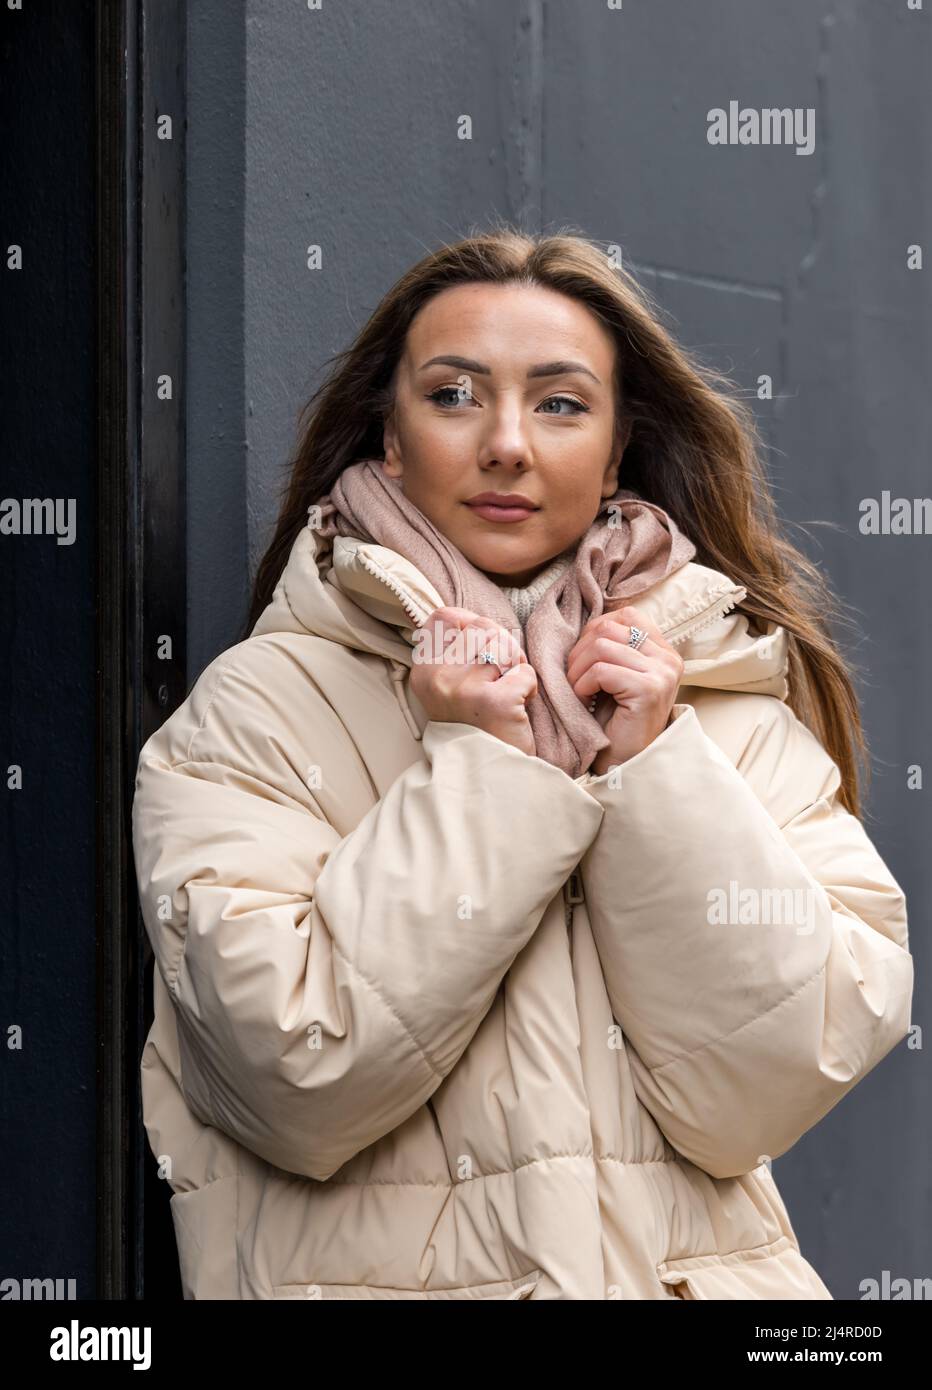 A pretty young woman or model wearing a Winter jacket posing in a street, Edinburgh, Scotland, UK Stock Photo